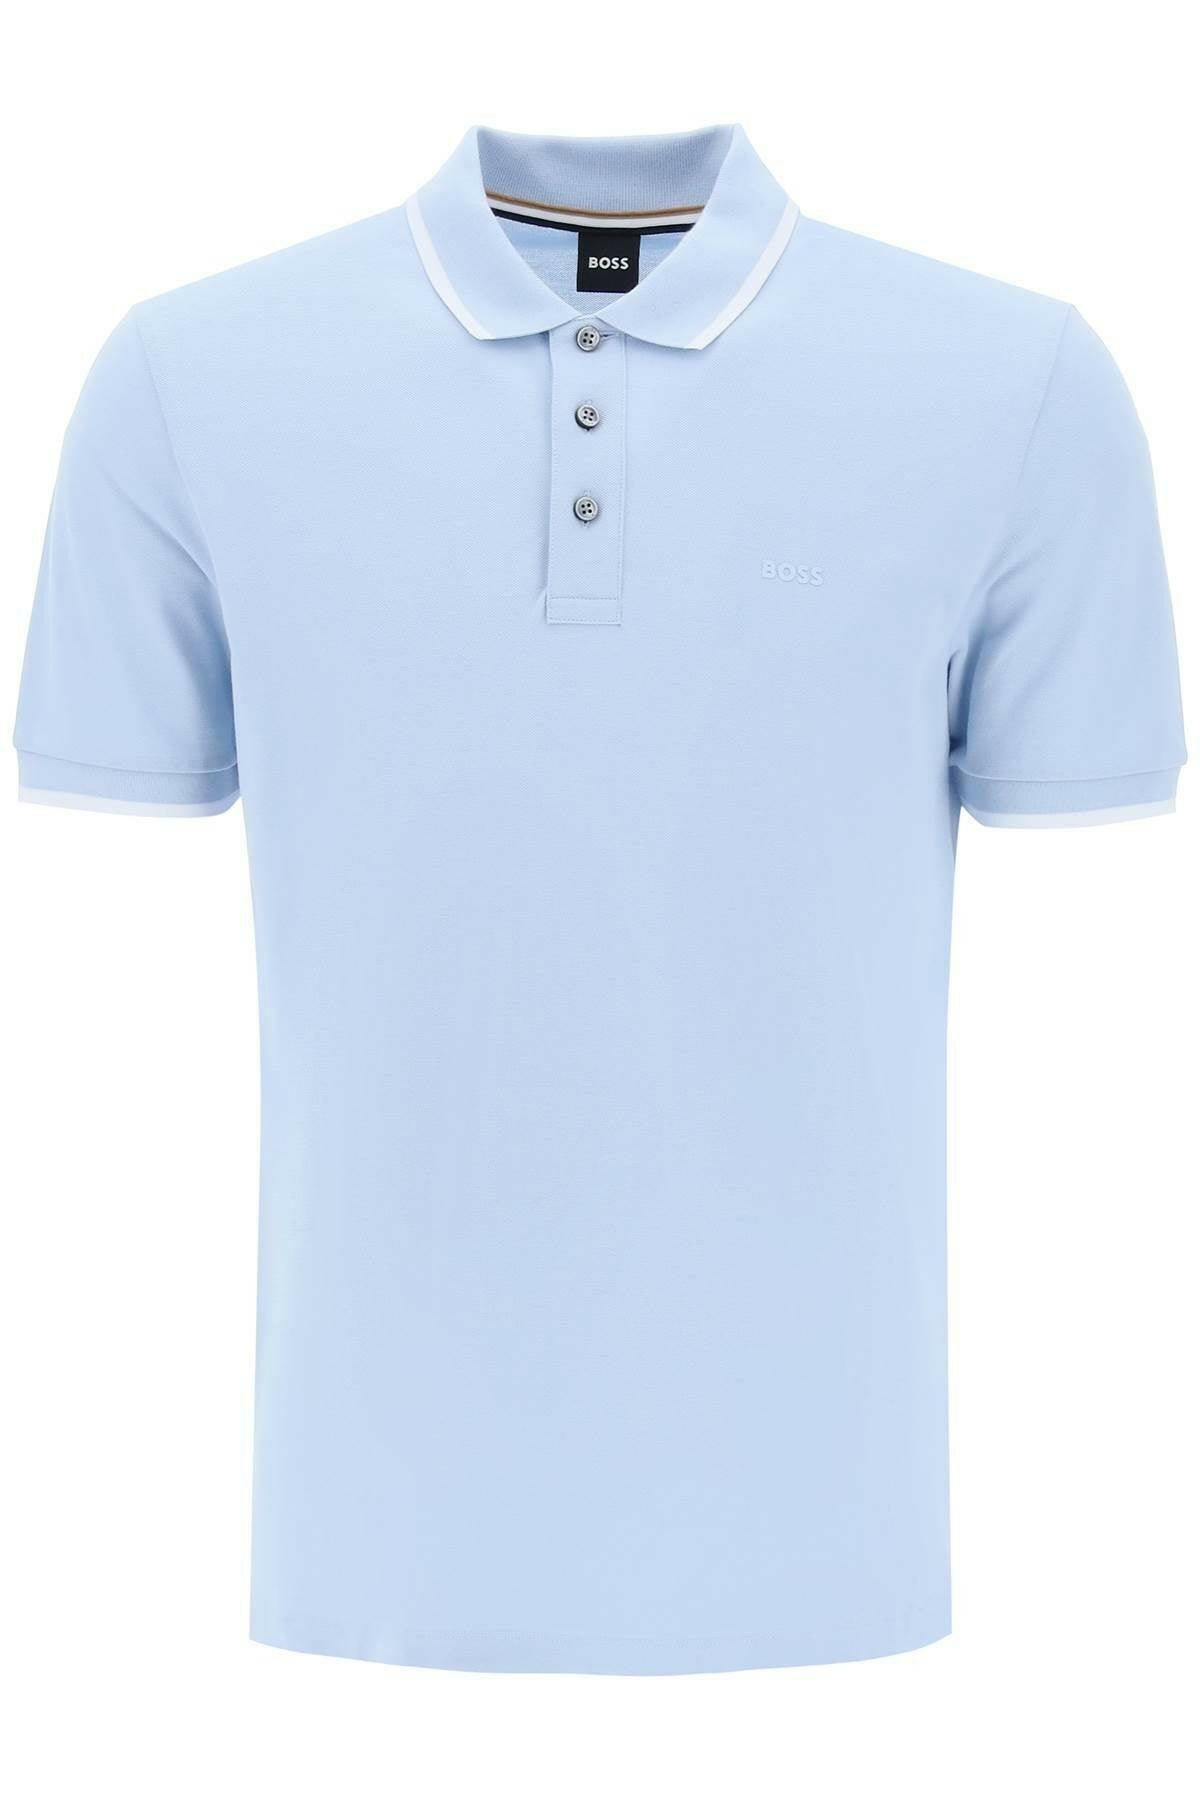 Light Pastel Blue Parlay Tipped Cotton Polo Shirt BOSS JOHN JULIA.